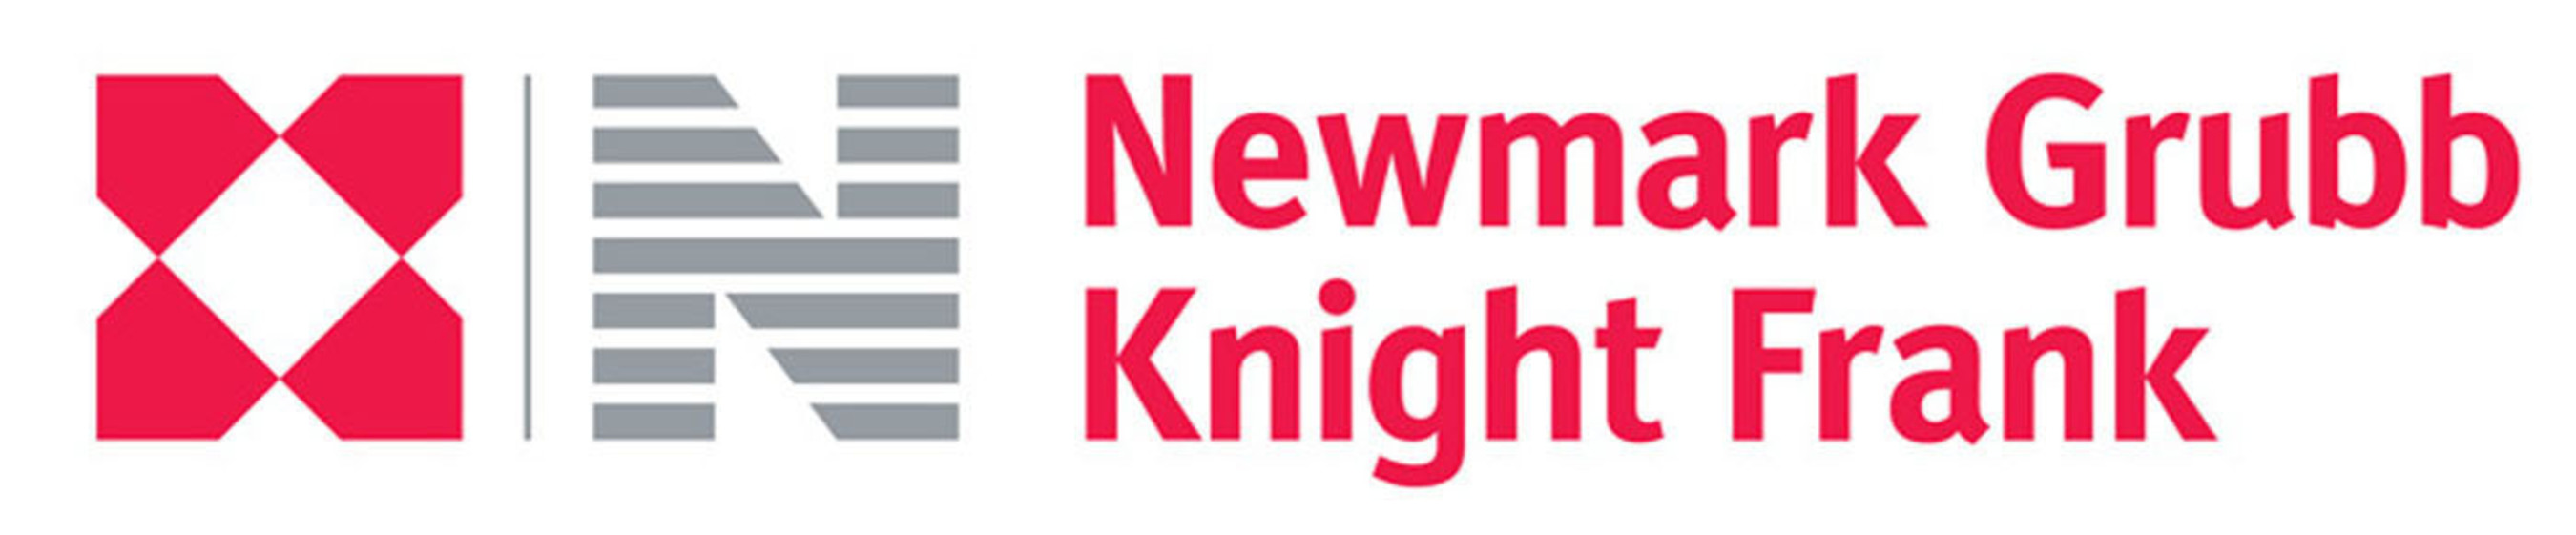 Newmark Grubb Knight Frank logo. (PRNewsFoto/Newmark Grubb Knight Frank) (PRNewsFoto/)